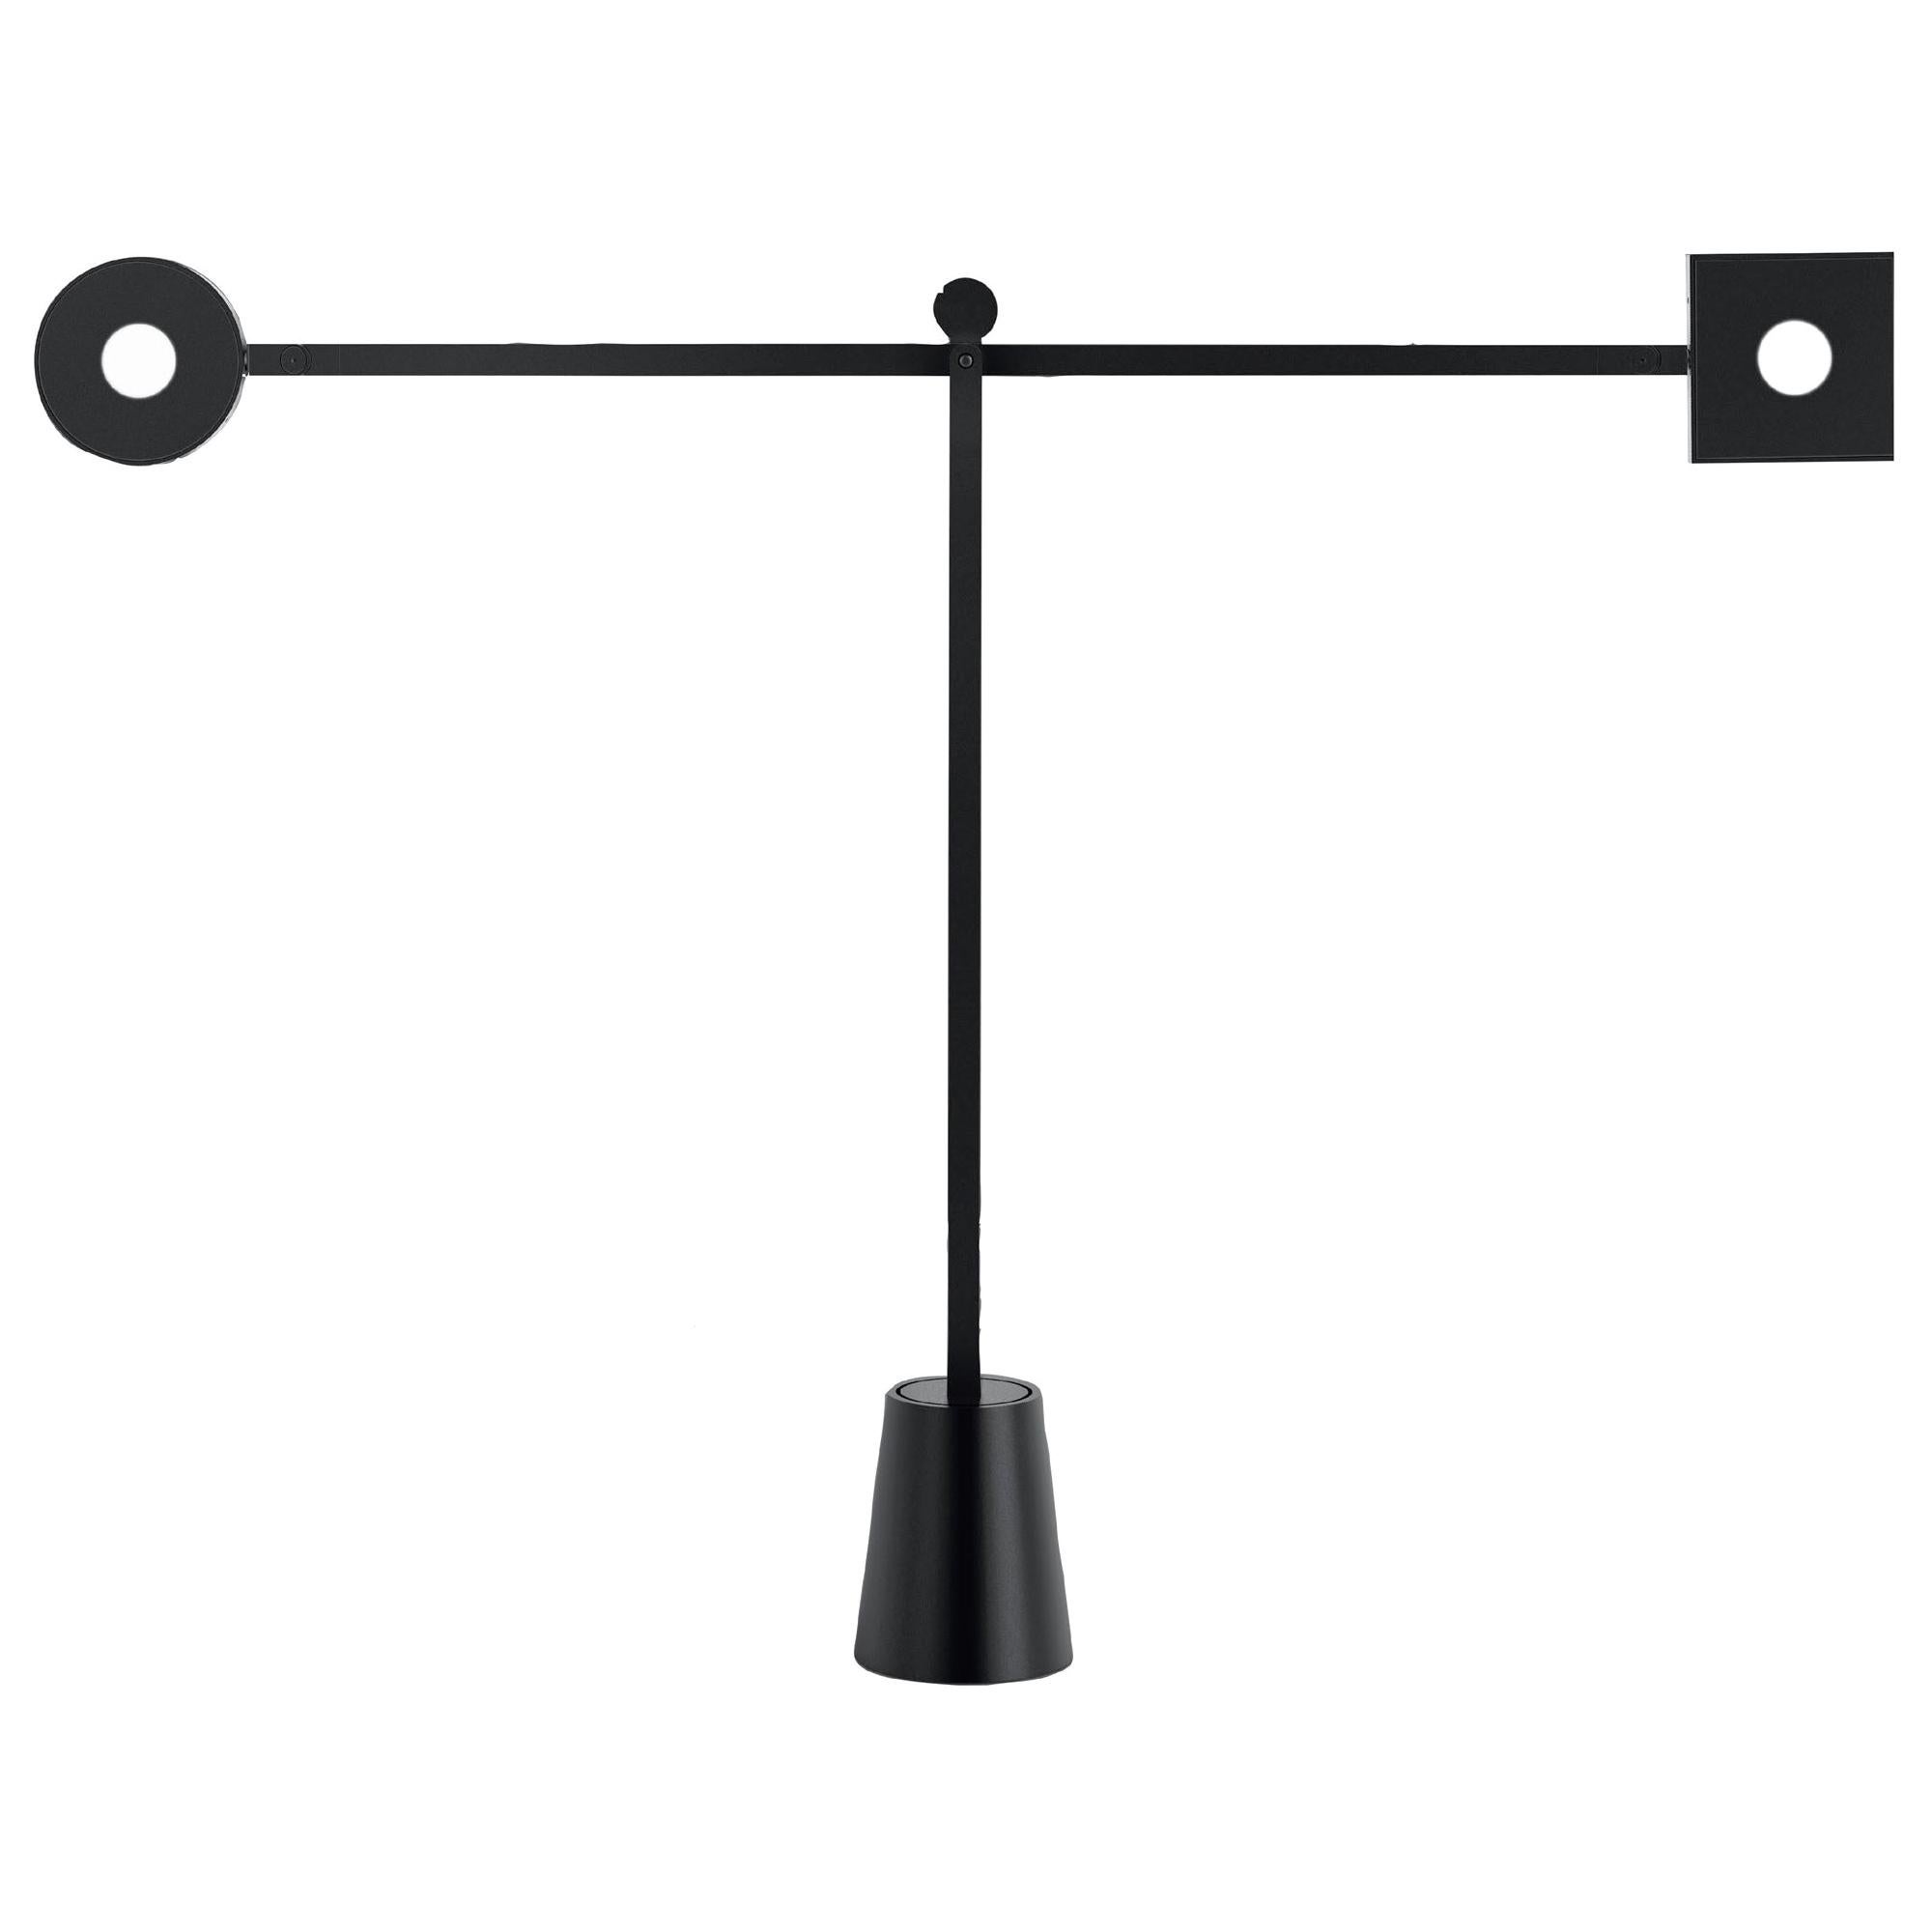 Artemide Equilibrist LED Table Lamp by Jean Nouvel